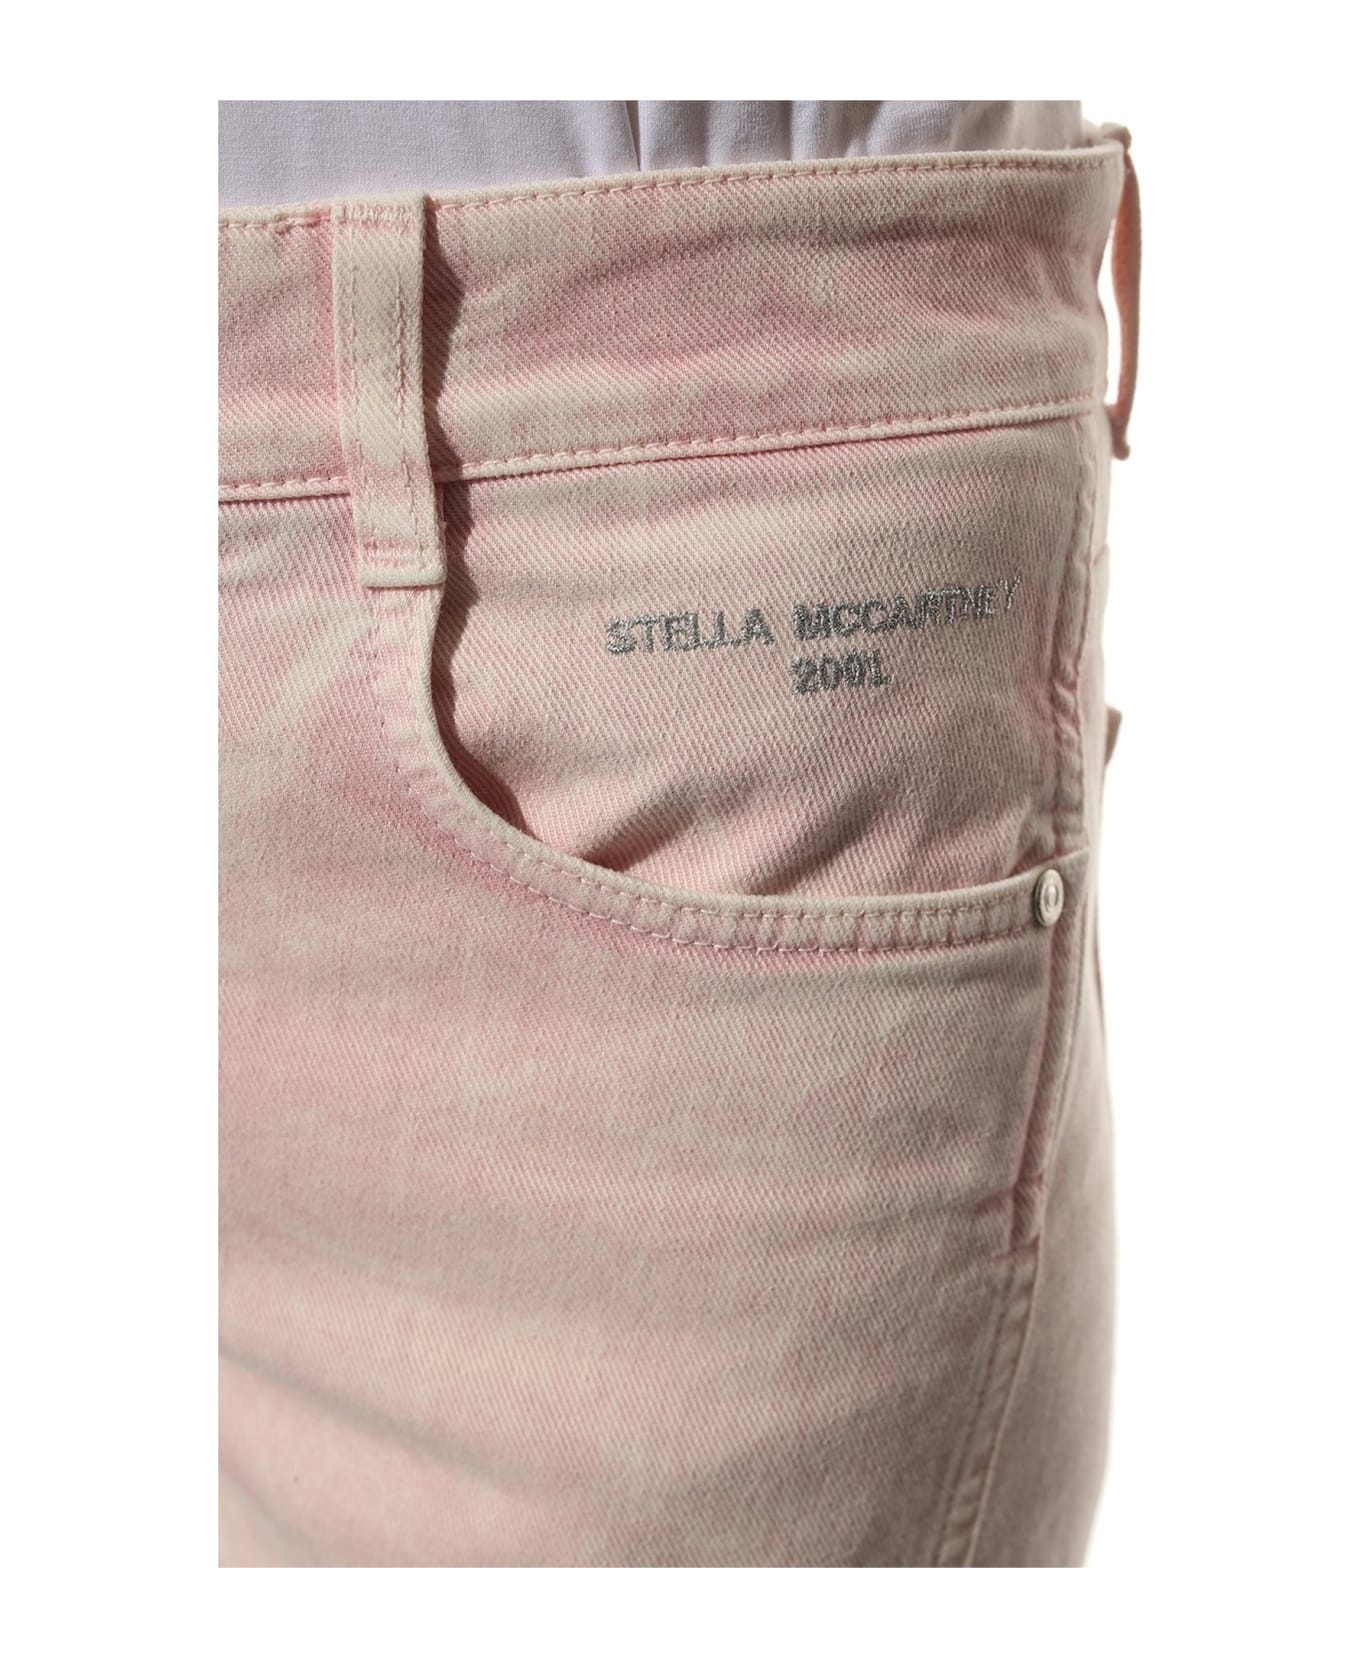 Stella McCartney Cropped Denim Jeans - Pink